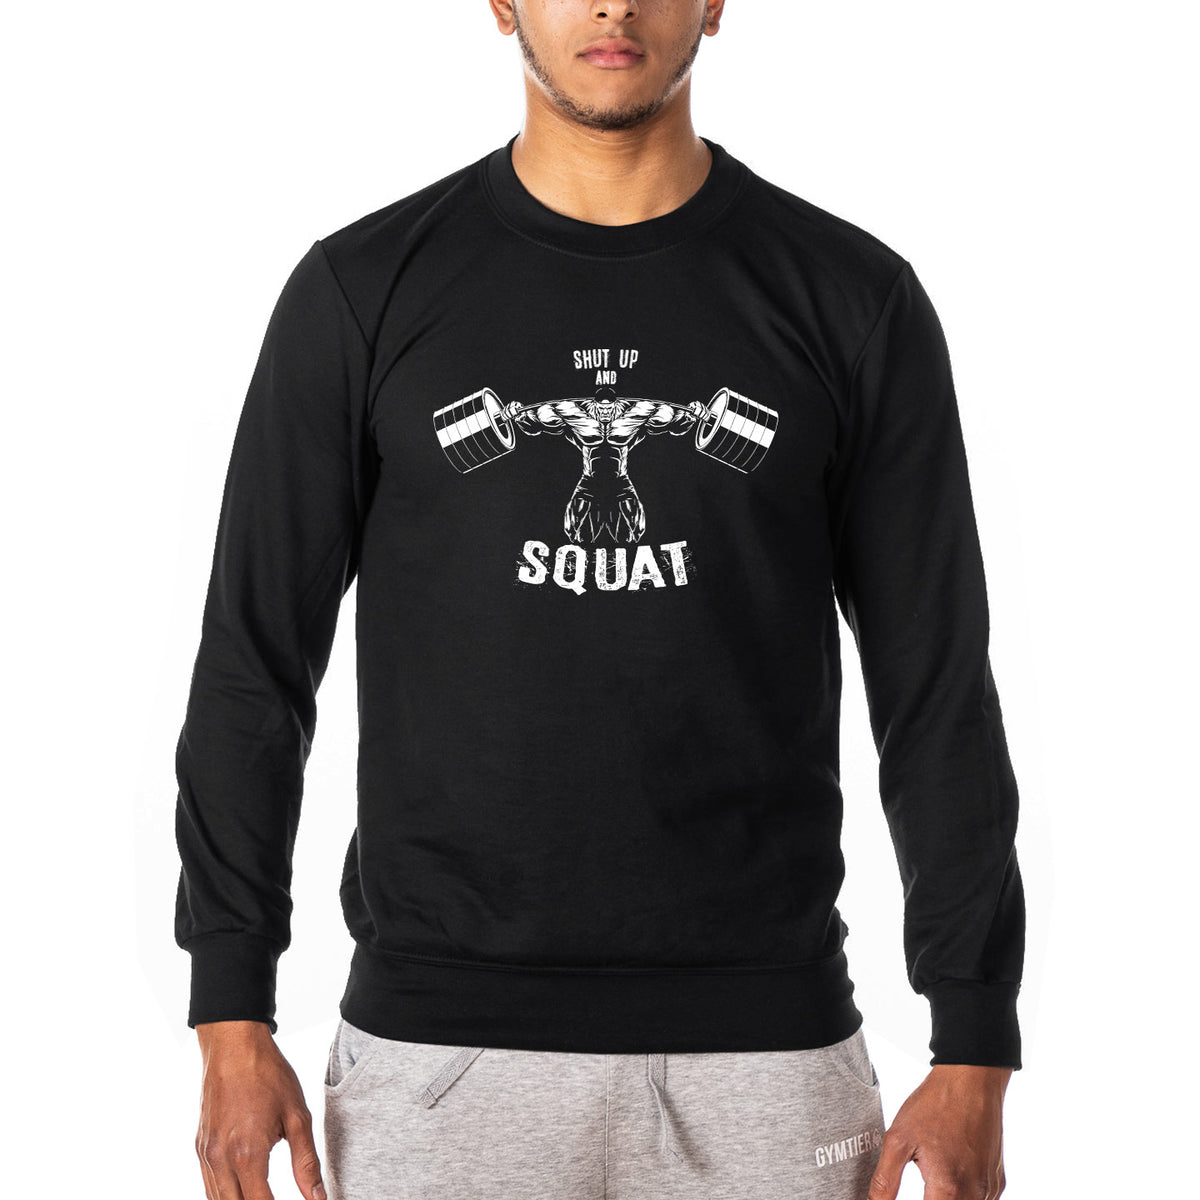 Shut Up and Squat - Gym Sweatshirt